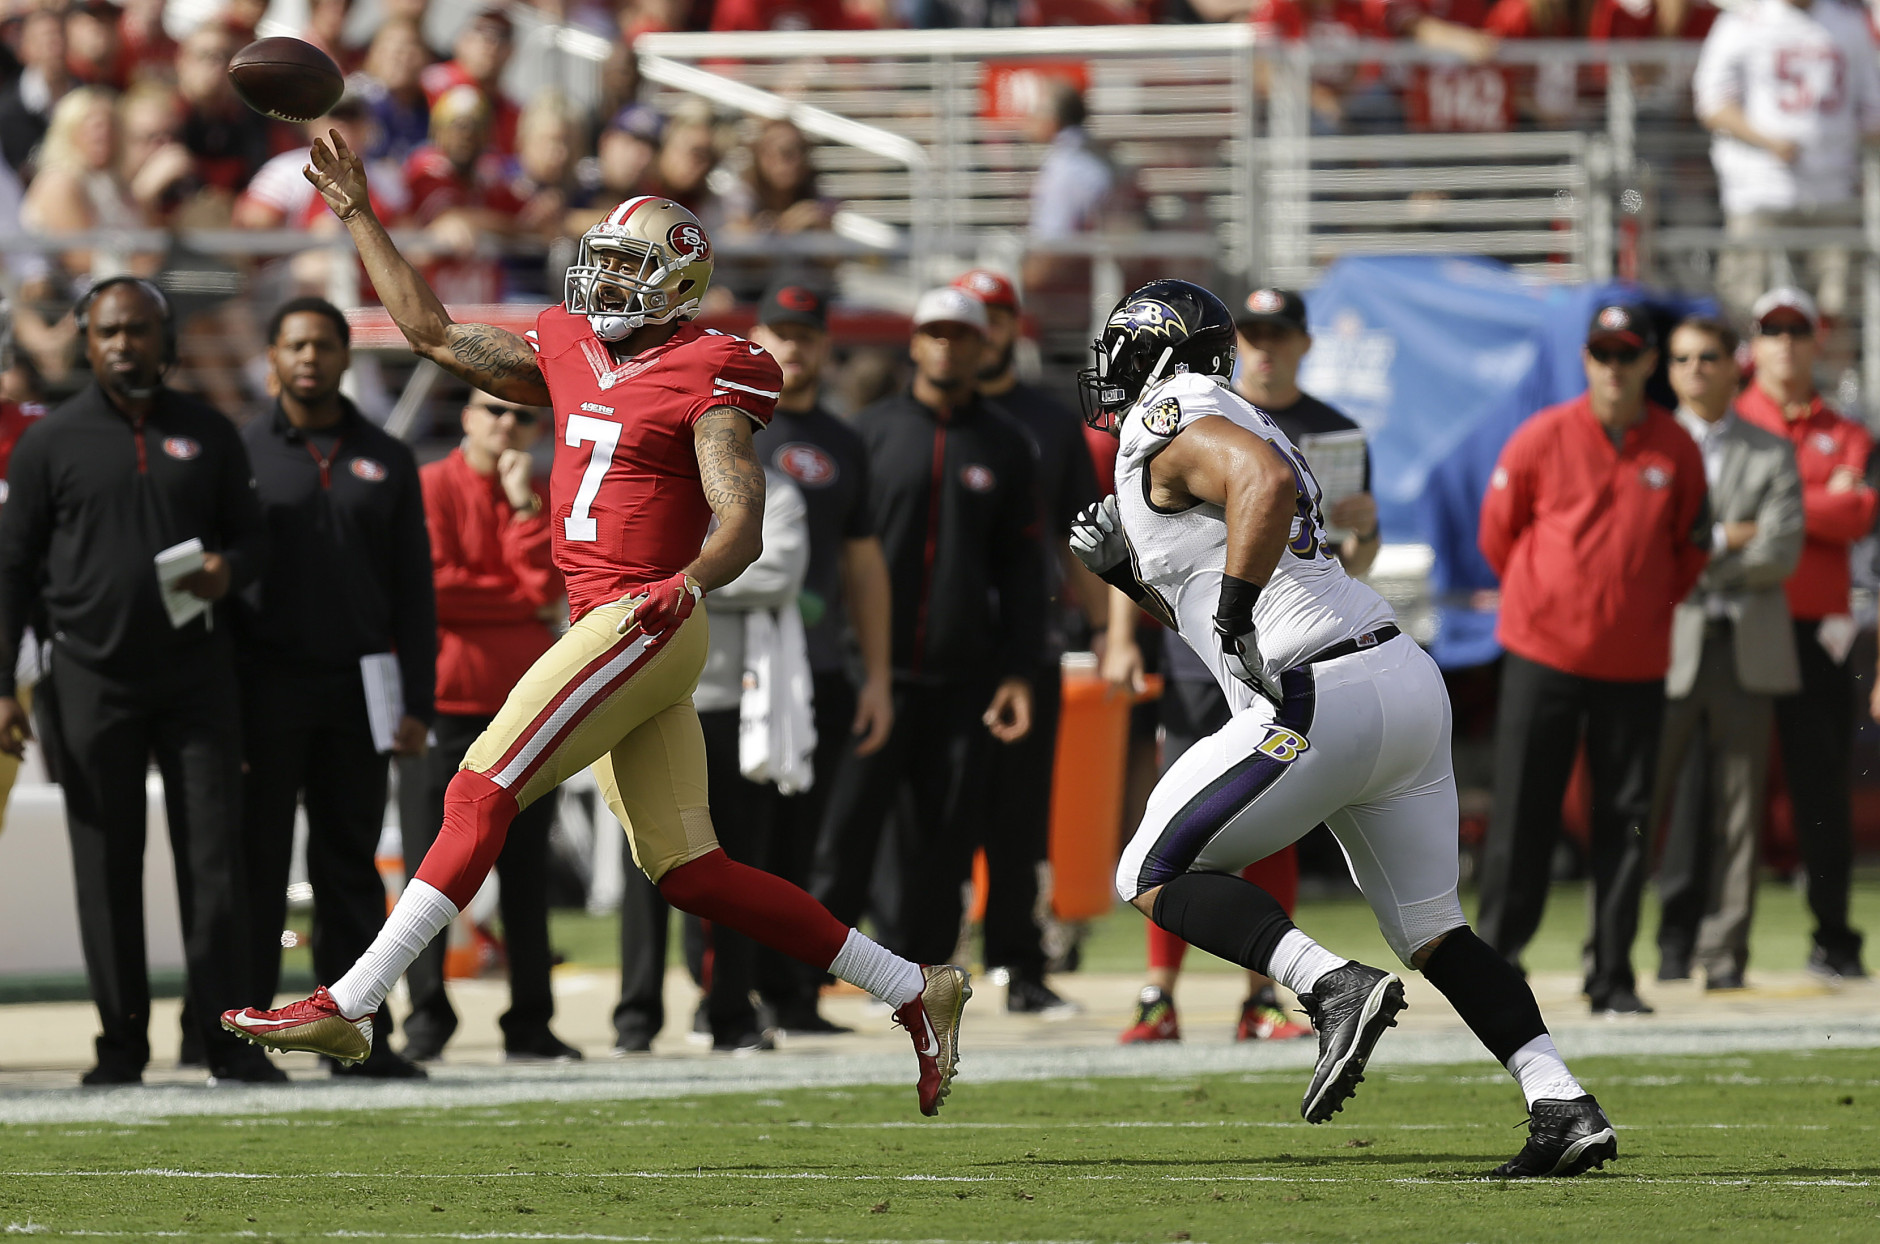 San Francisco 49ers quarterback Colin Kaepernick (7) throws against the Baltimore Ravens during the first half of an NFL football game in Santa Clara, Calif., Sunday, Oct. 18, 2015. (AP Photo/Ben Margot)